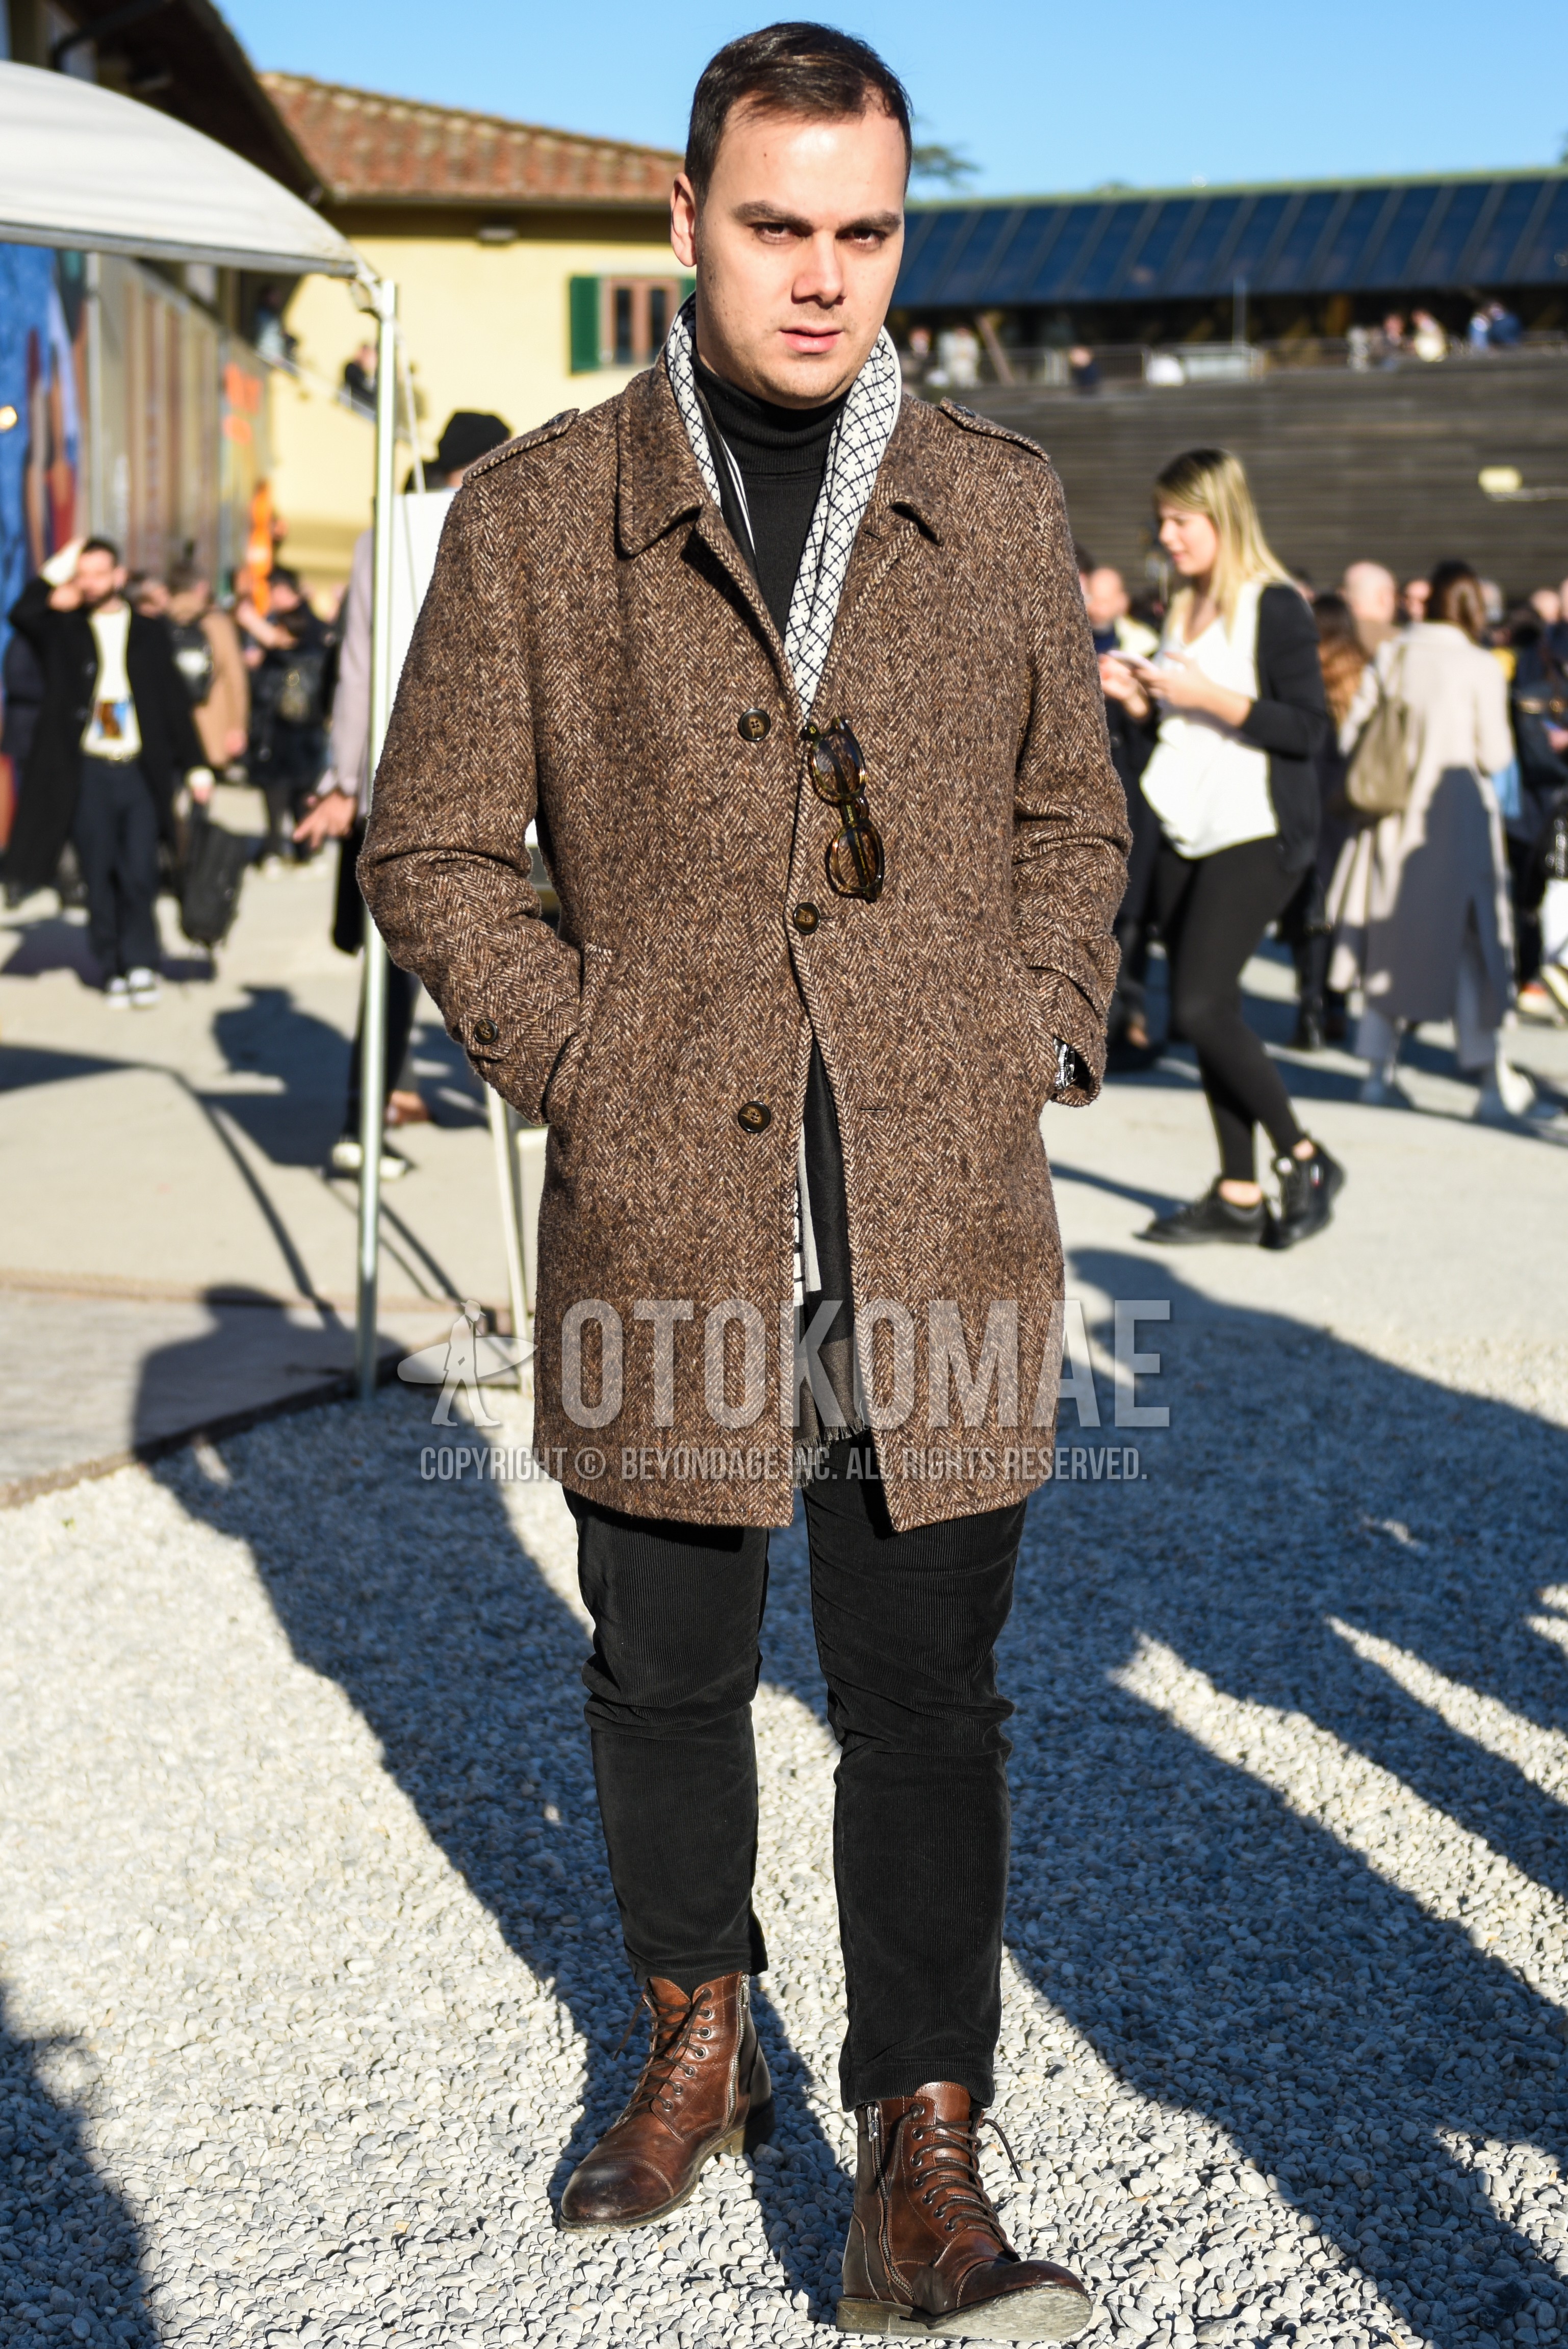 Men's autumn winter outfit with gray scarf scarf, brown herringbone stenkarrer coat, black plain turtleneck knit, black plain damaged jeans, brown work boots.